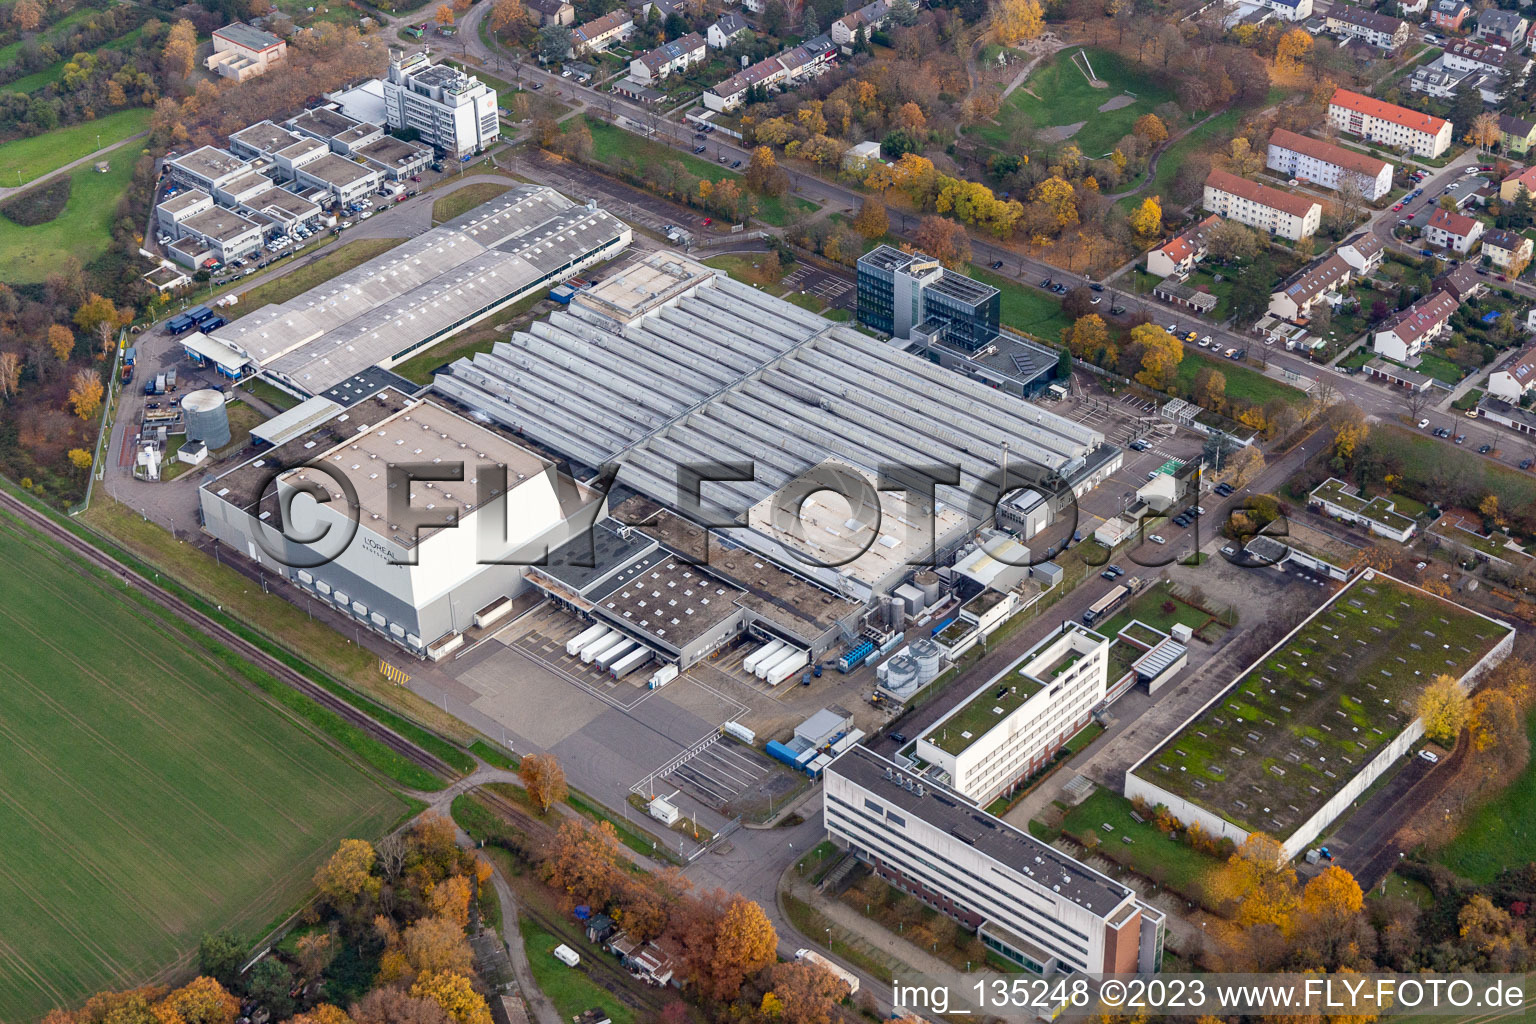 L'OREAL Produktion Deutschland GmbH im Ortsteil Nordweststadt in Karlsruhe im Bundesland Baden-Württemberg